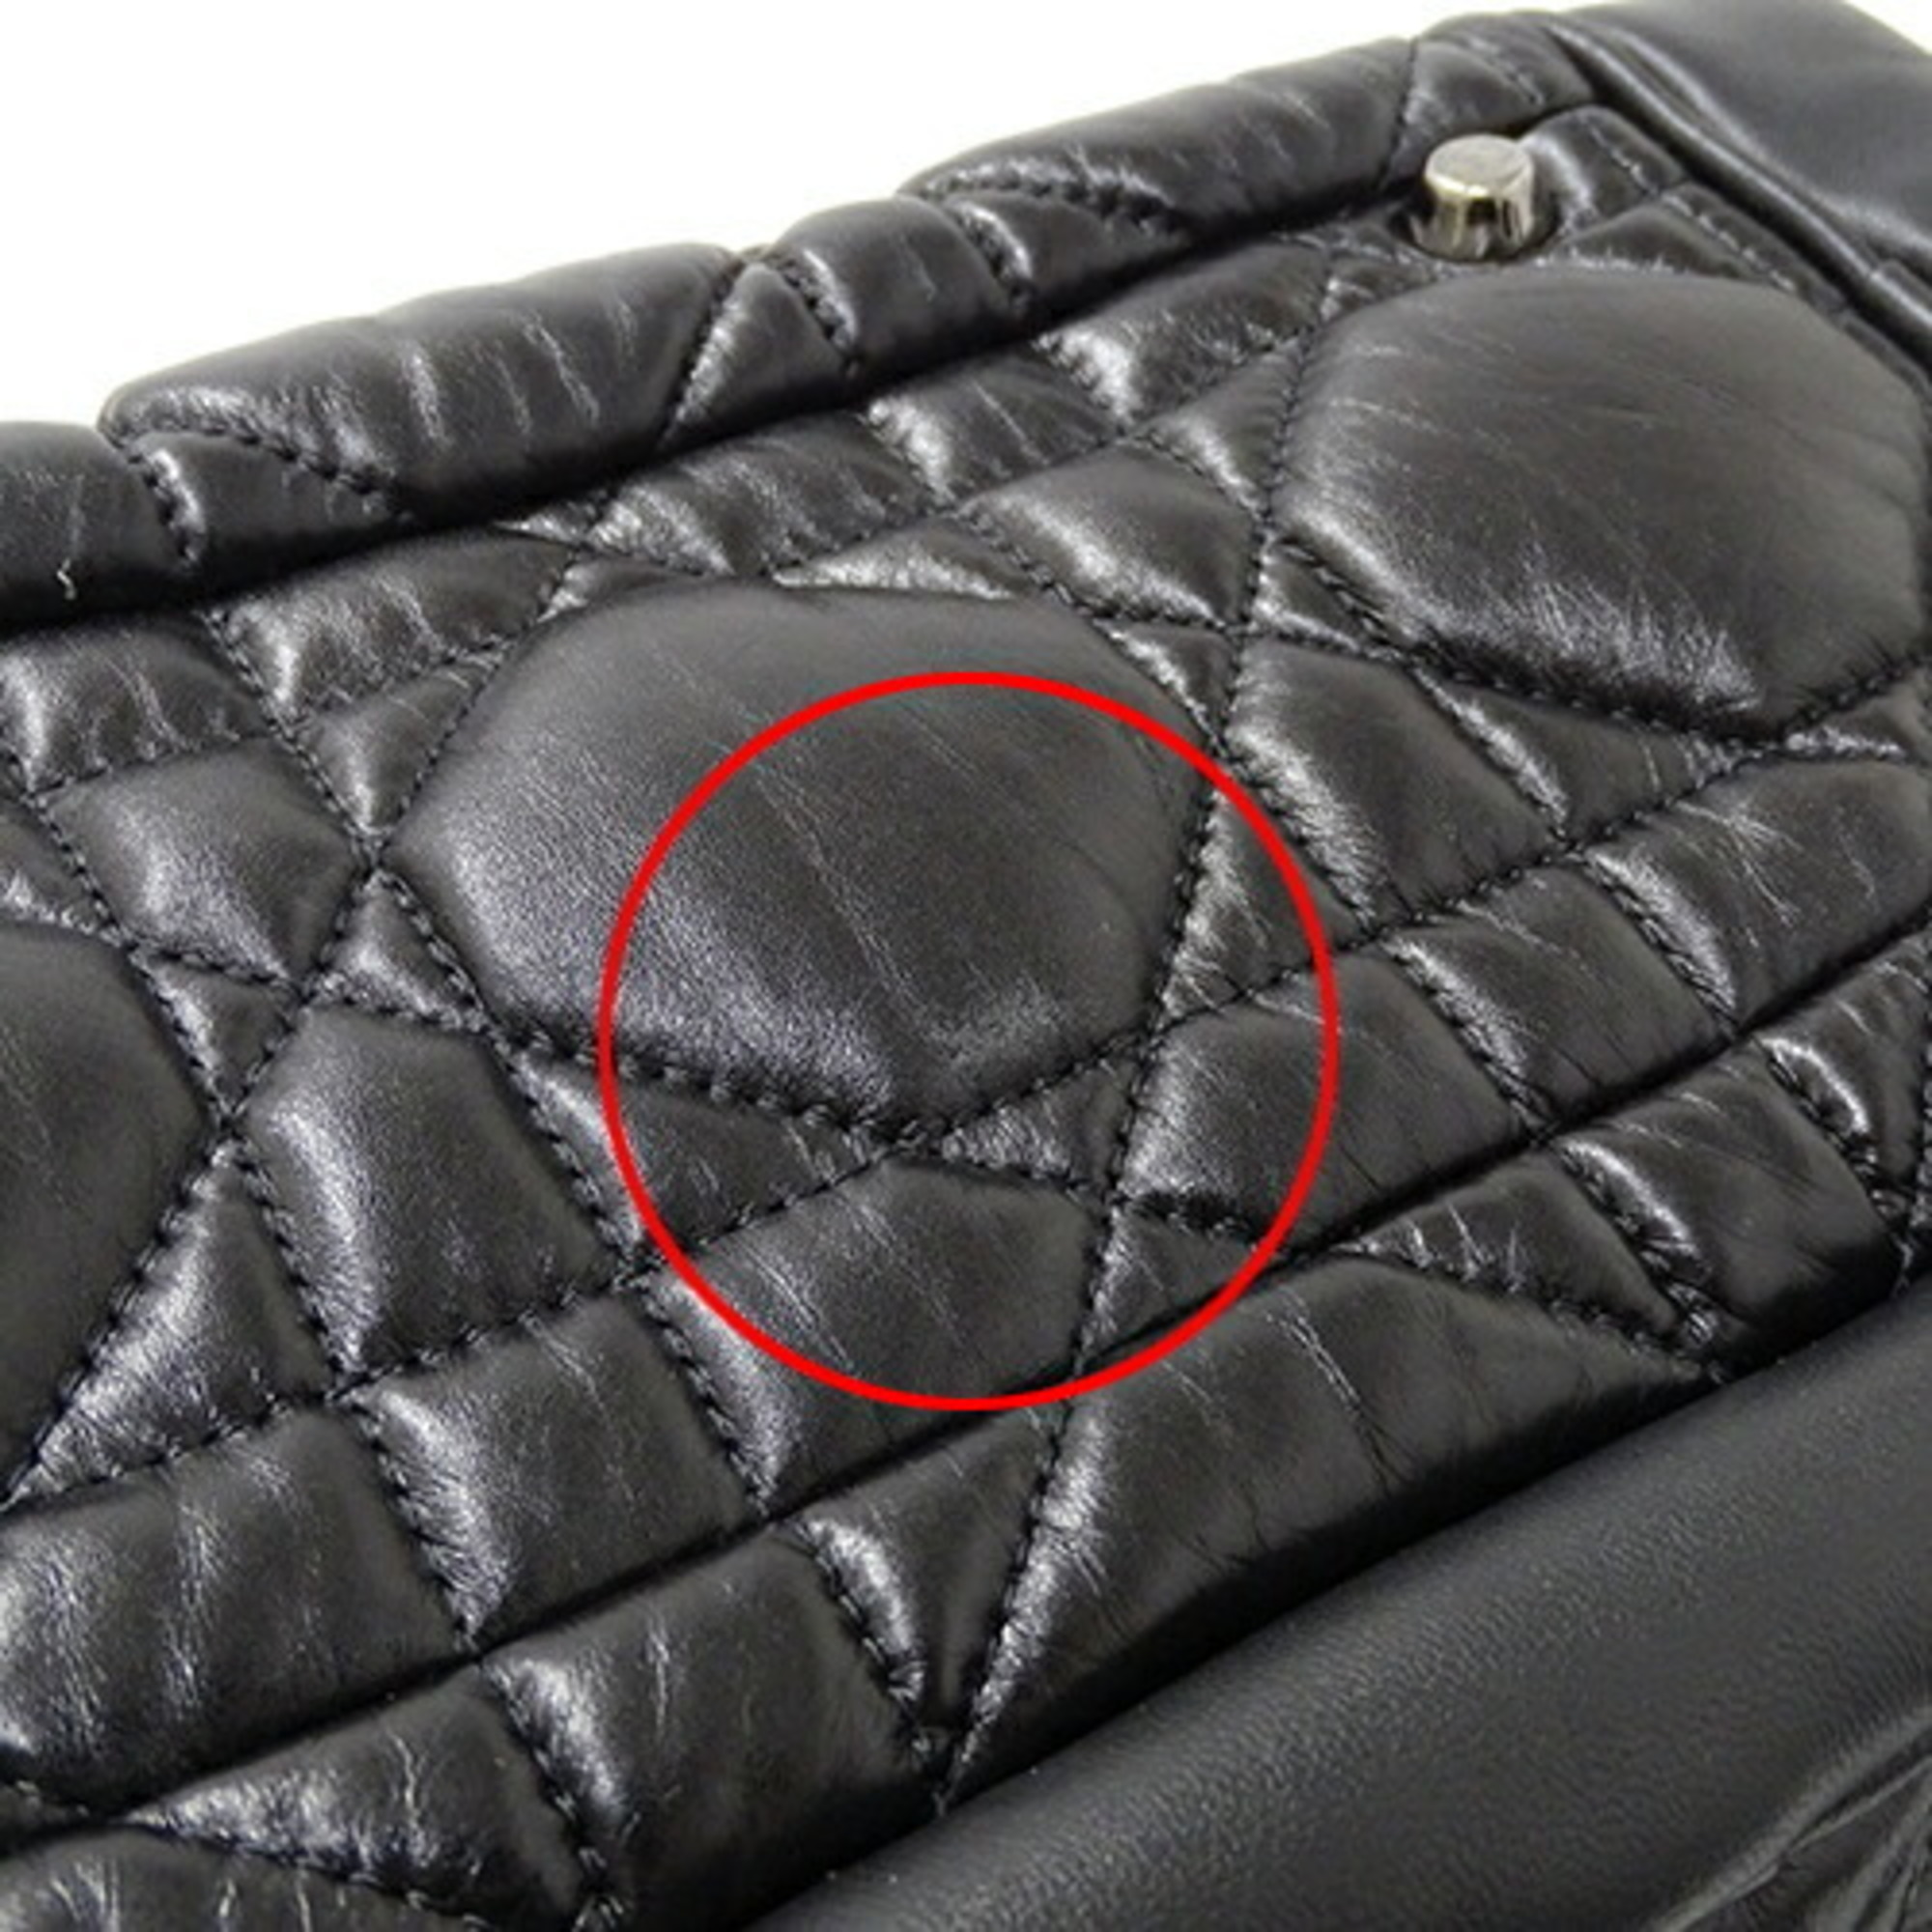 Christian Dior Bag Women's Shoulder Handbag 2way Macro Cannage Camera Calfskin Black Crossbody